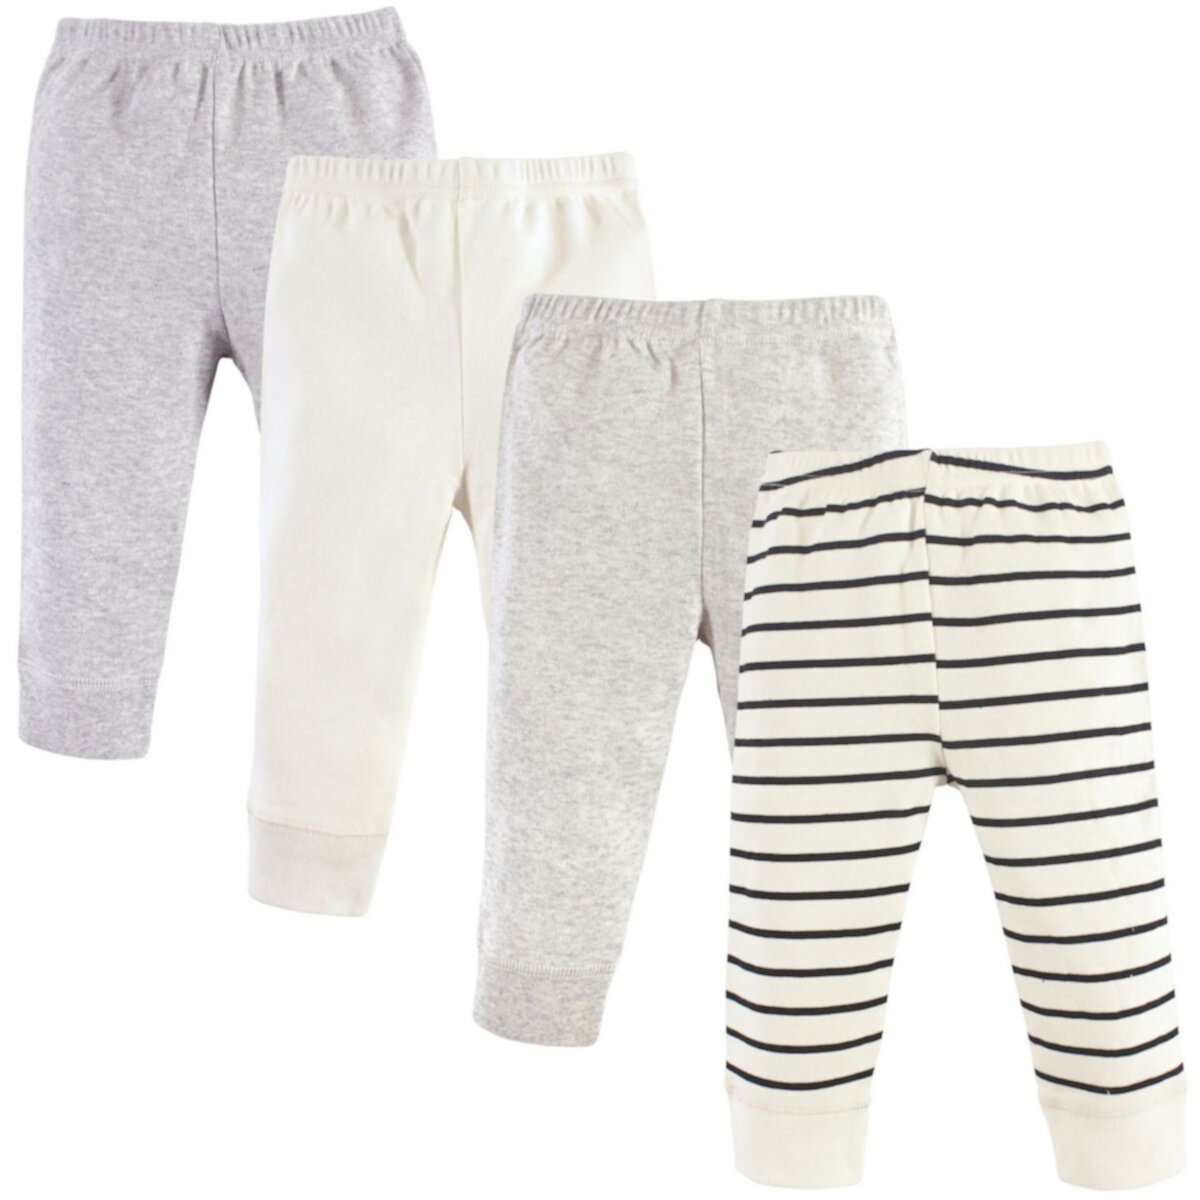 Luvable Friends Baby and Toddler Cotton Pants 4pk, Cream Stripe Luvable Friends